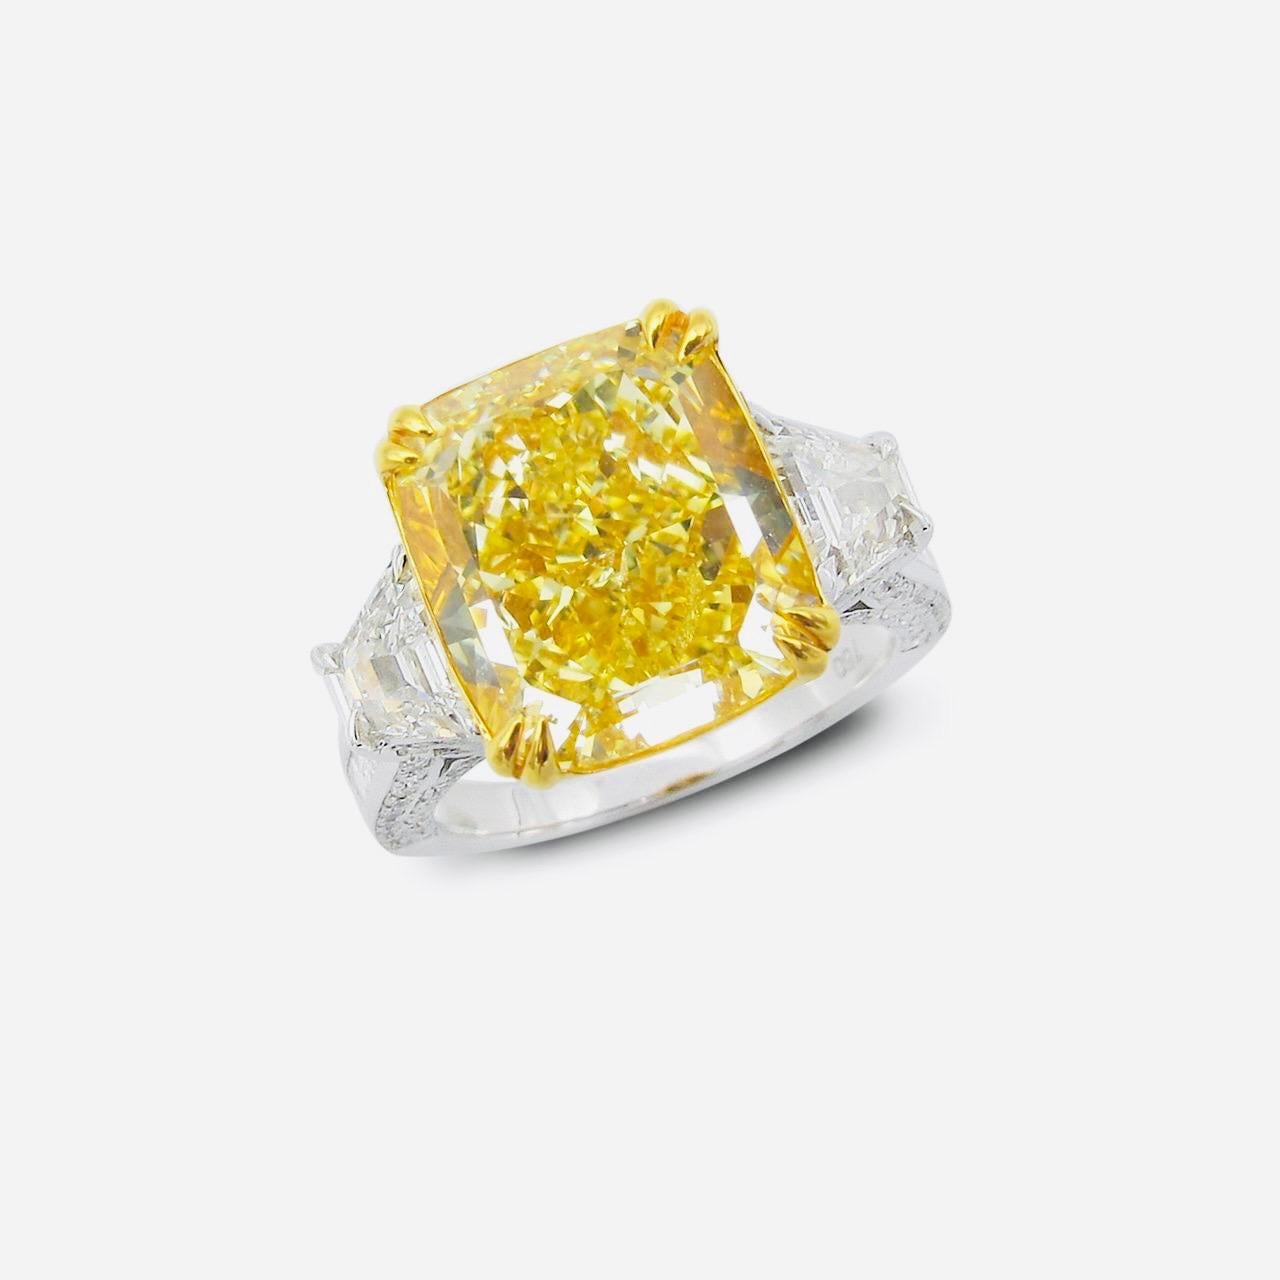 Cushion Cut Emilio Jewelry GIA Certified 7.00 Carat Fancy Intense Yellow Diamond Ring For Sale